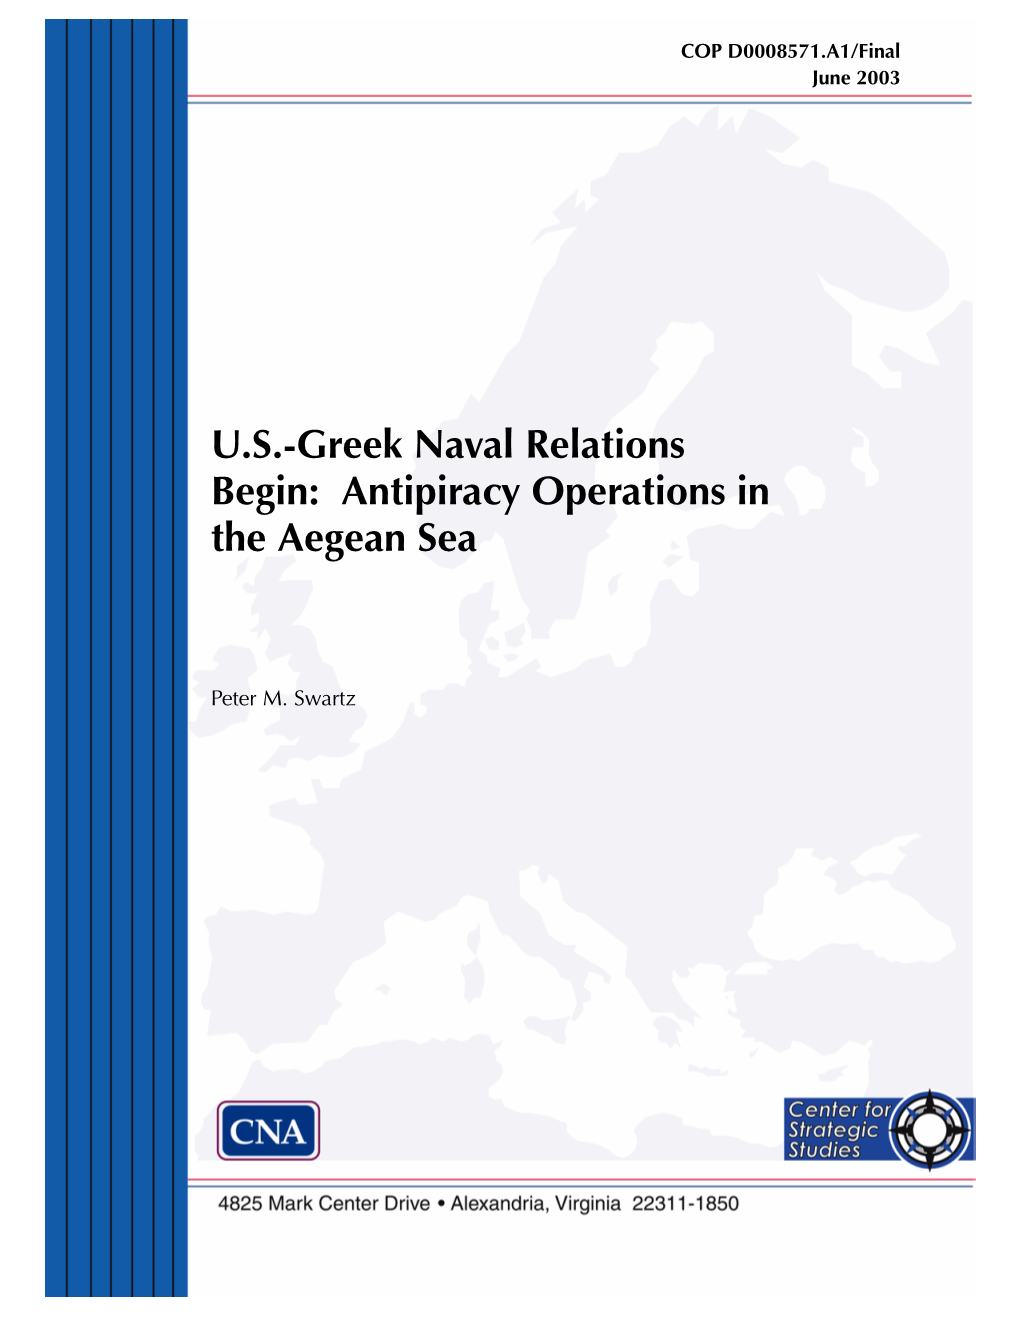 U.S.-Greek Naval Relations Begin: Antipiracy Operations in the Aegean Sea